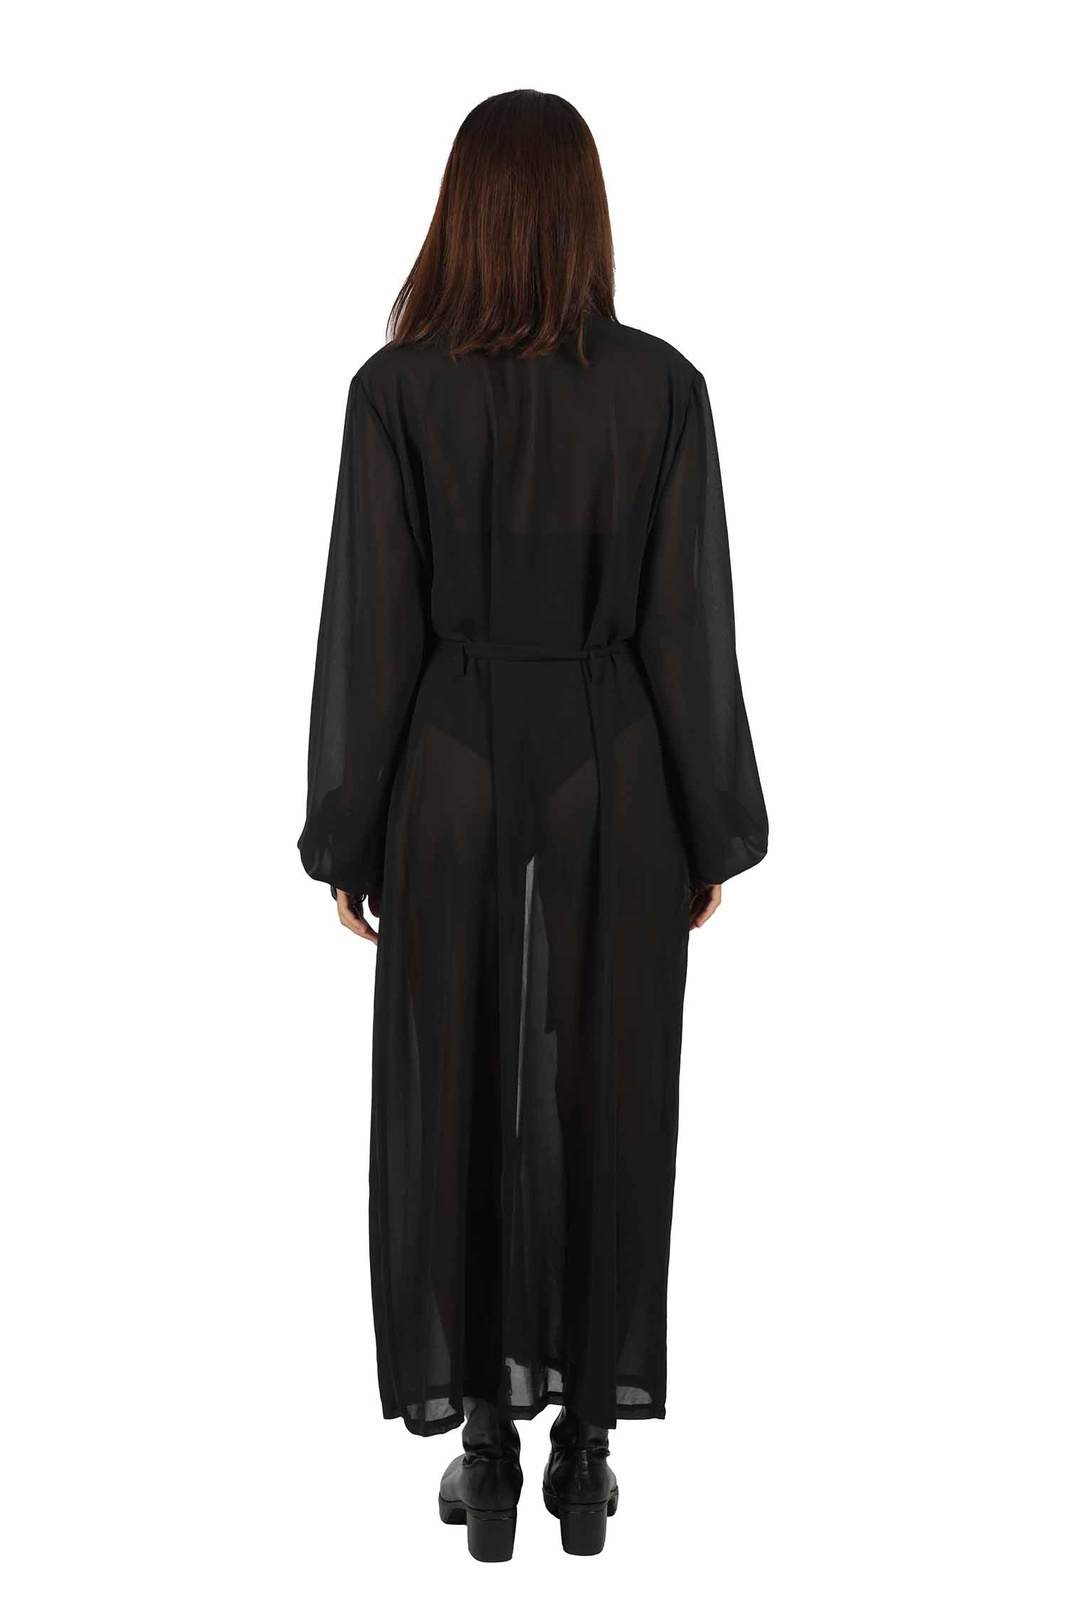 sheer black robe from Love Khaos